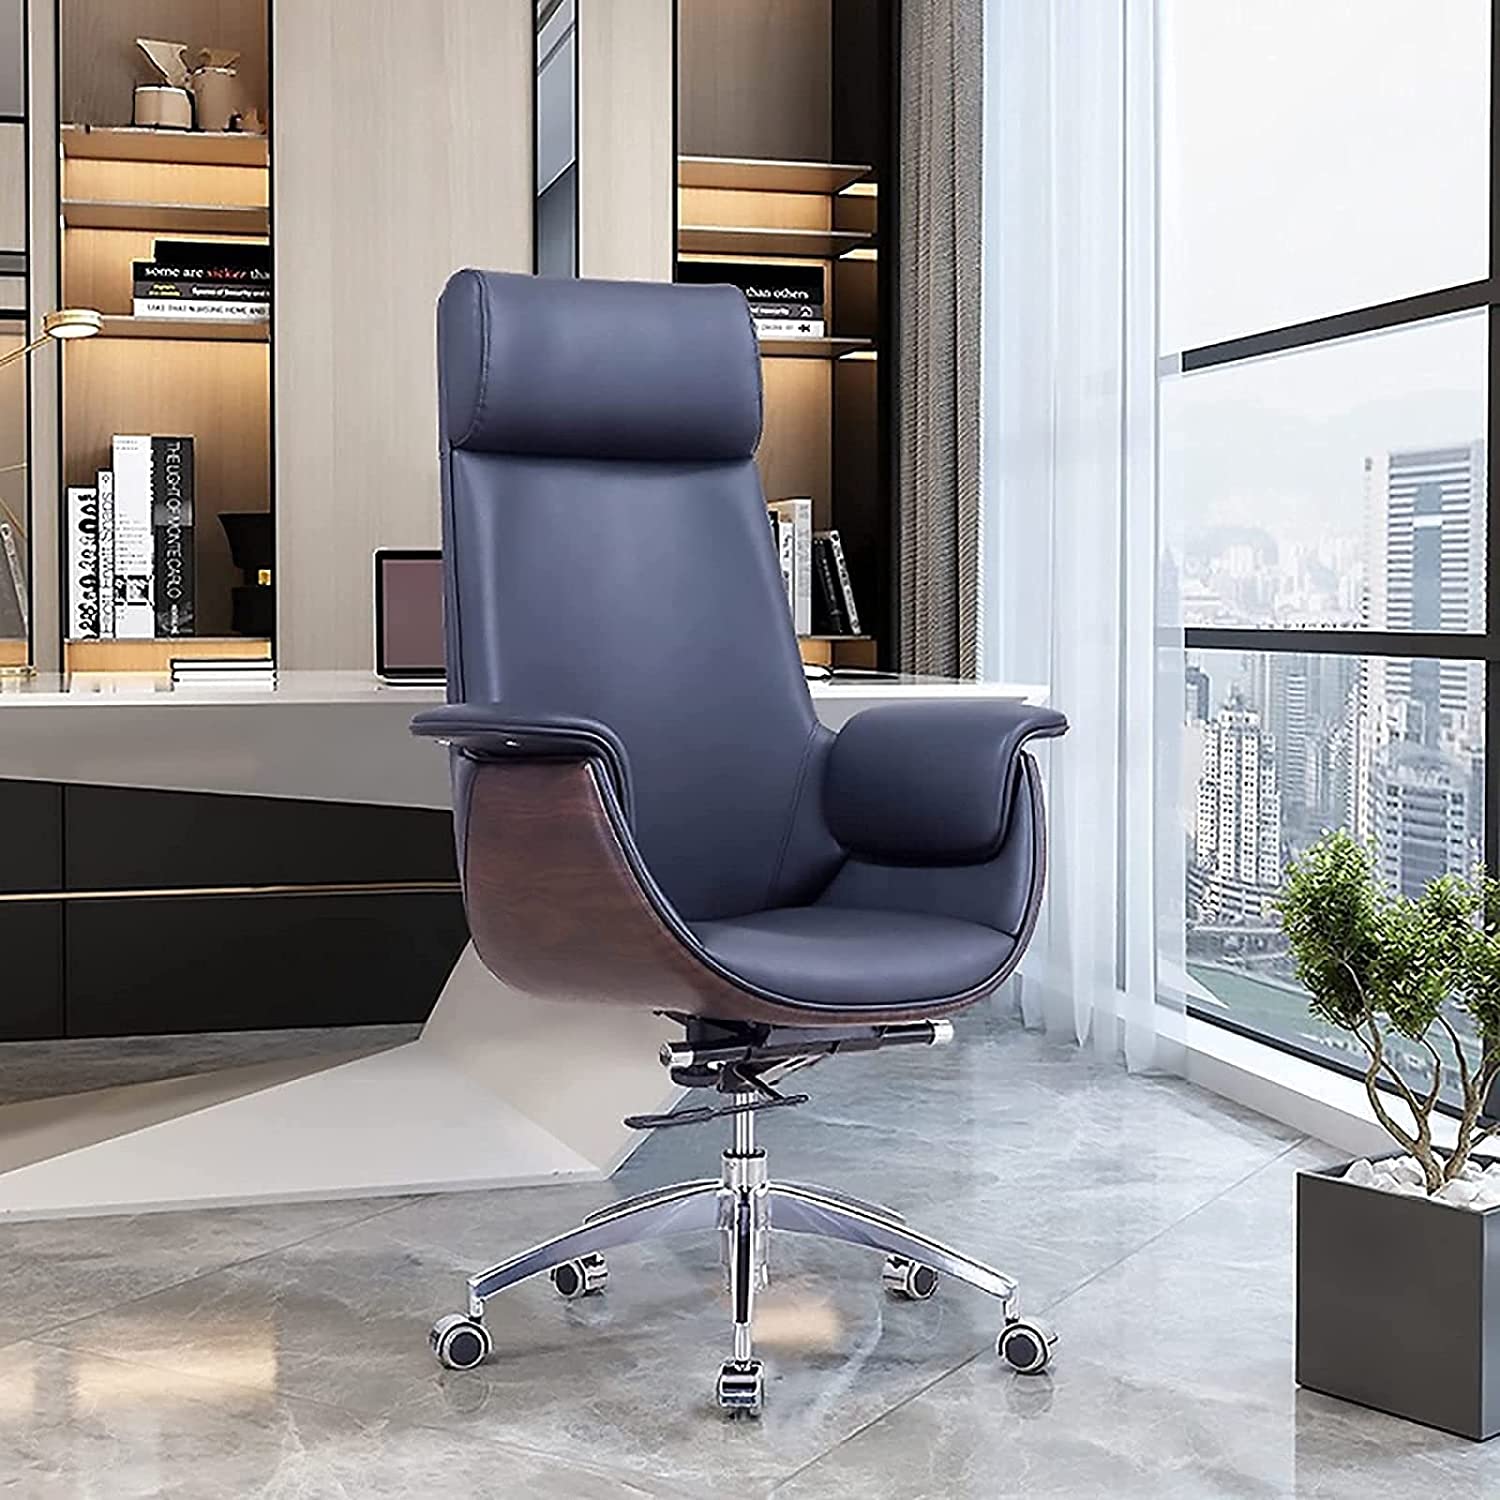 Modern Executive Chair | HOG - Home. Office. Garden online marketplace